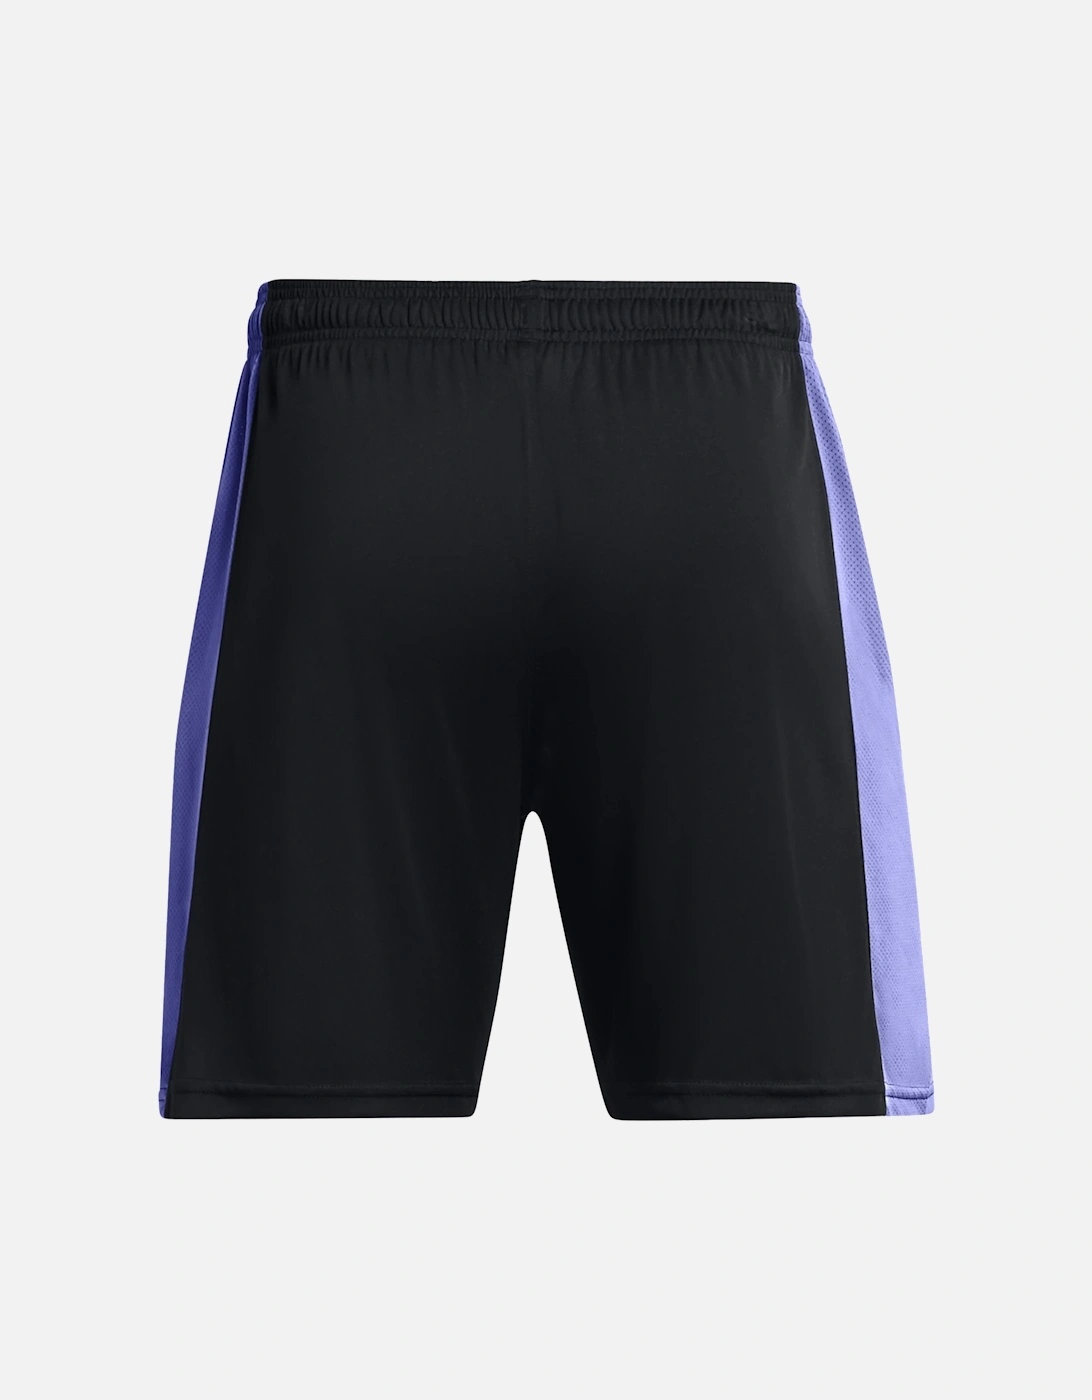 Mens Challenger Knit Shorts (Blue/Black)